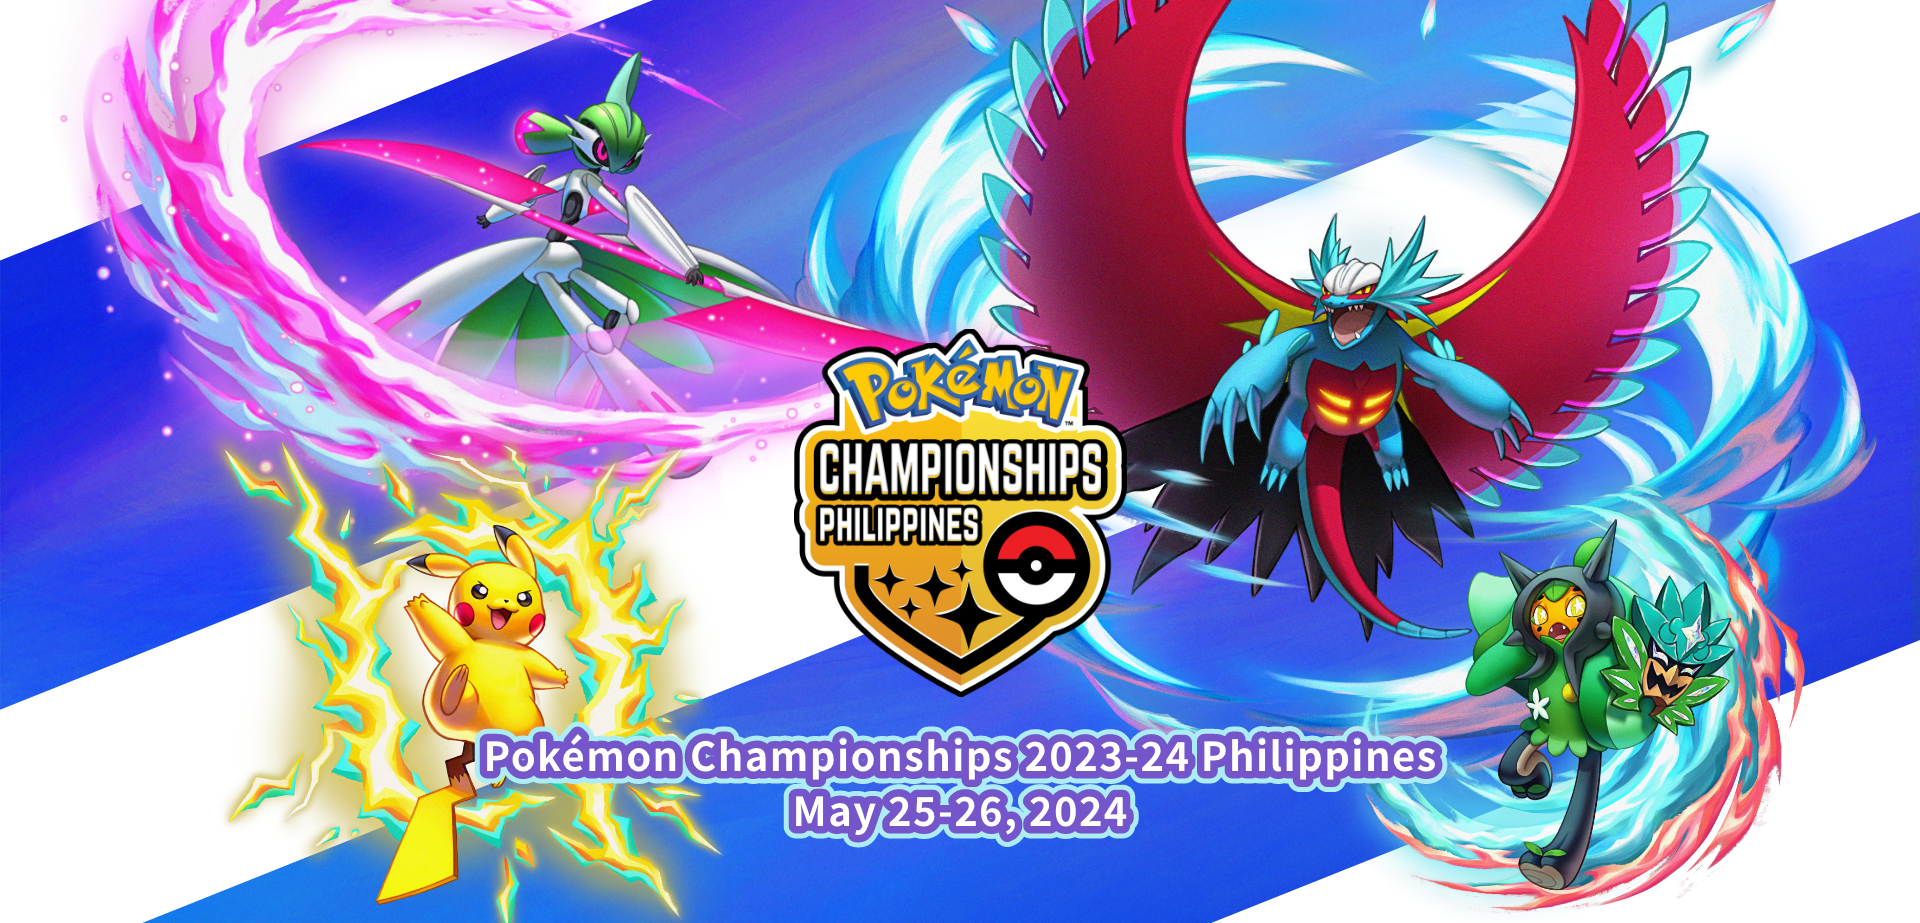 Pokemon_Campaign / Event _Pokémon Championships 2023-24 Philippines